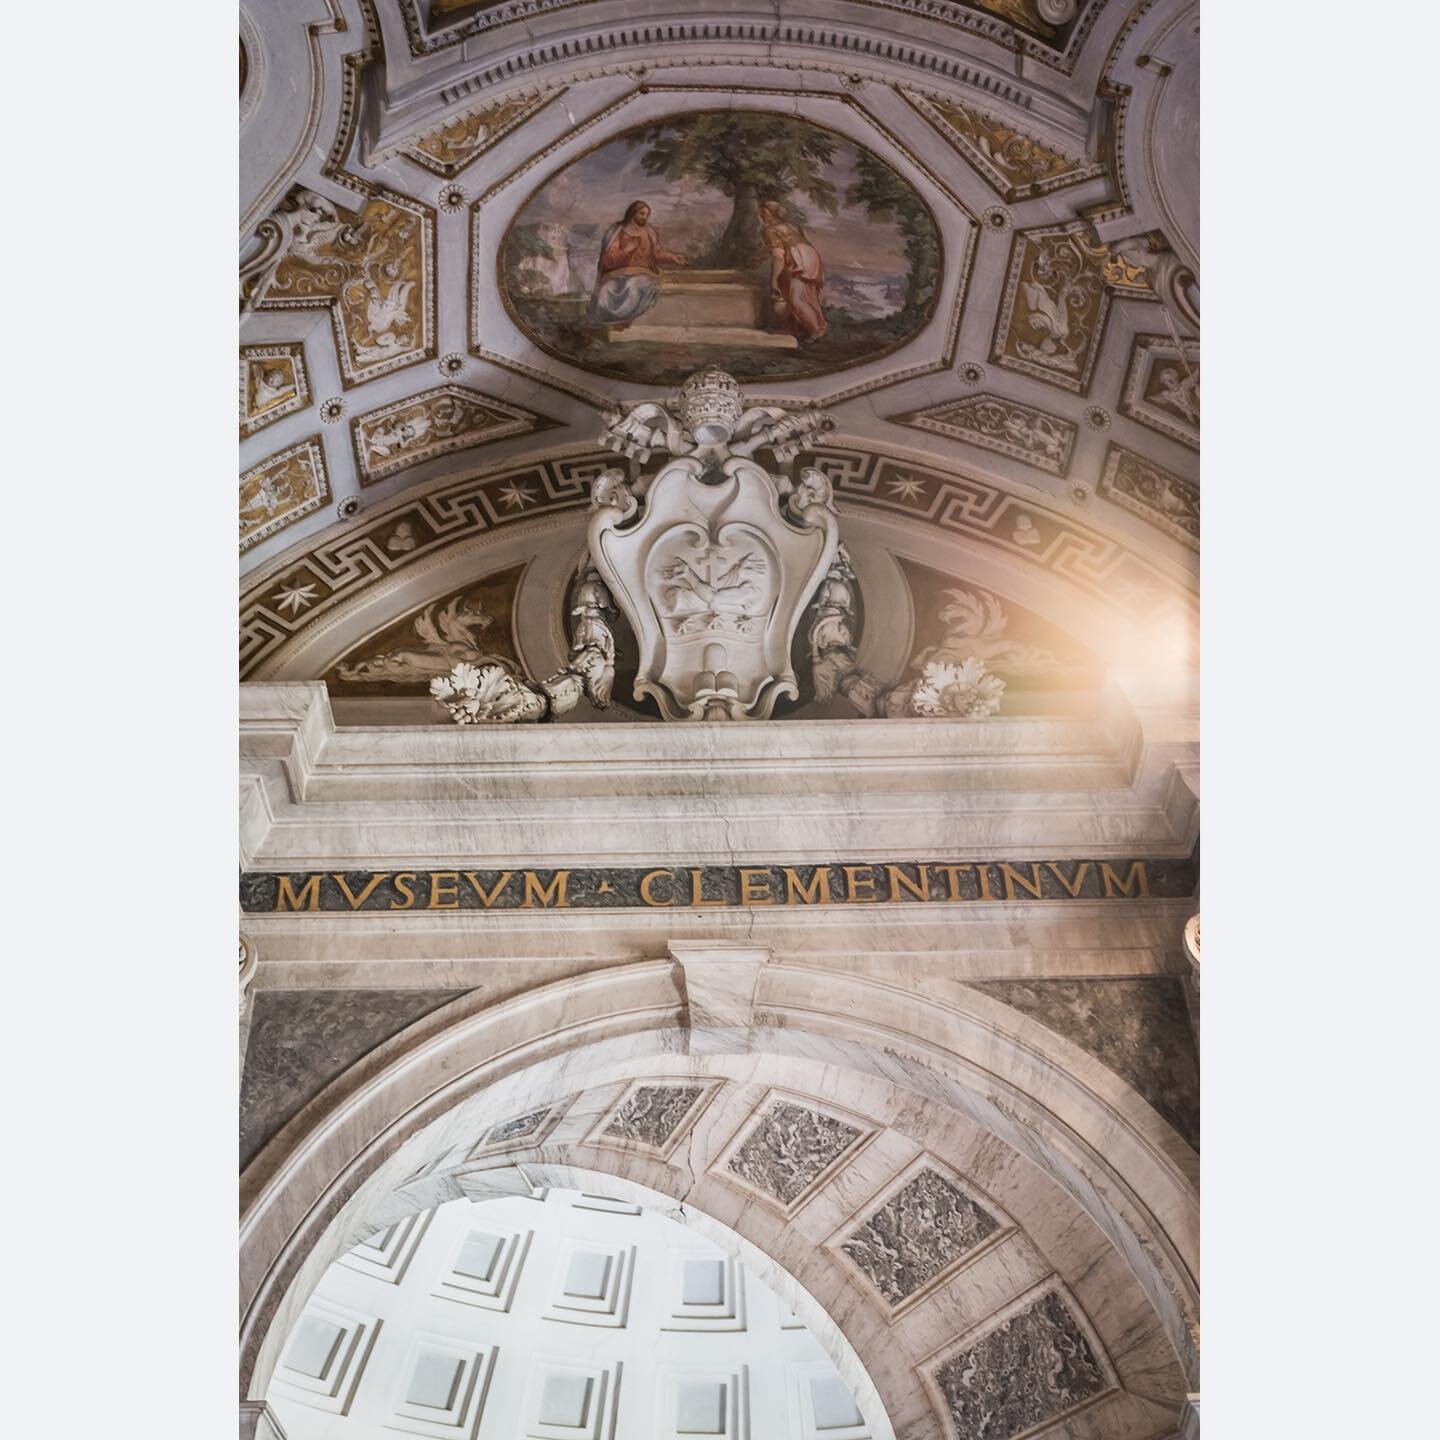 Ornament hall of the Vatican museum - Rome
.
.
#Rome #Vaticanmuseum #churchphotography #Romechurches #churchinterior #lightandshadow #visitRome #architecturephotography #ancientRome #churchoninstagram #historicalarchitecture #romantemple #Romephotogr